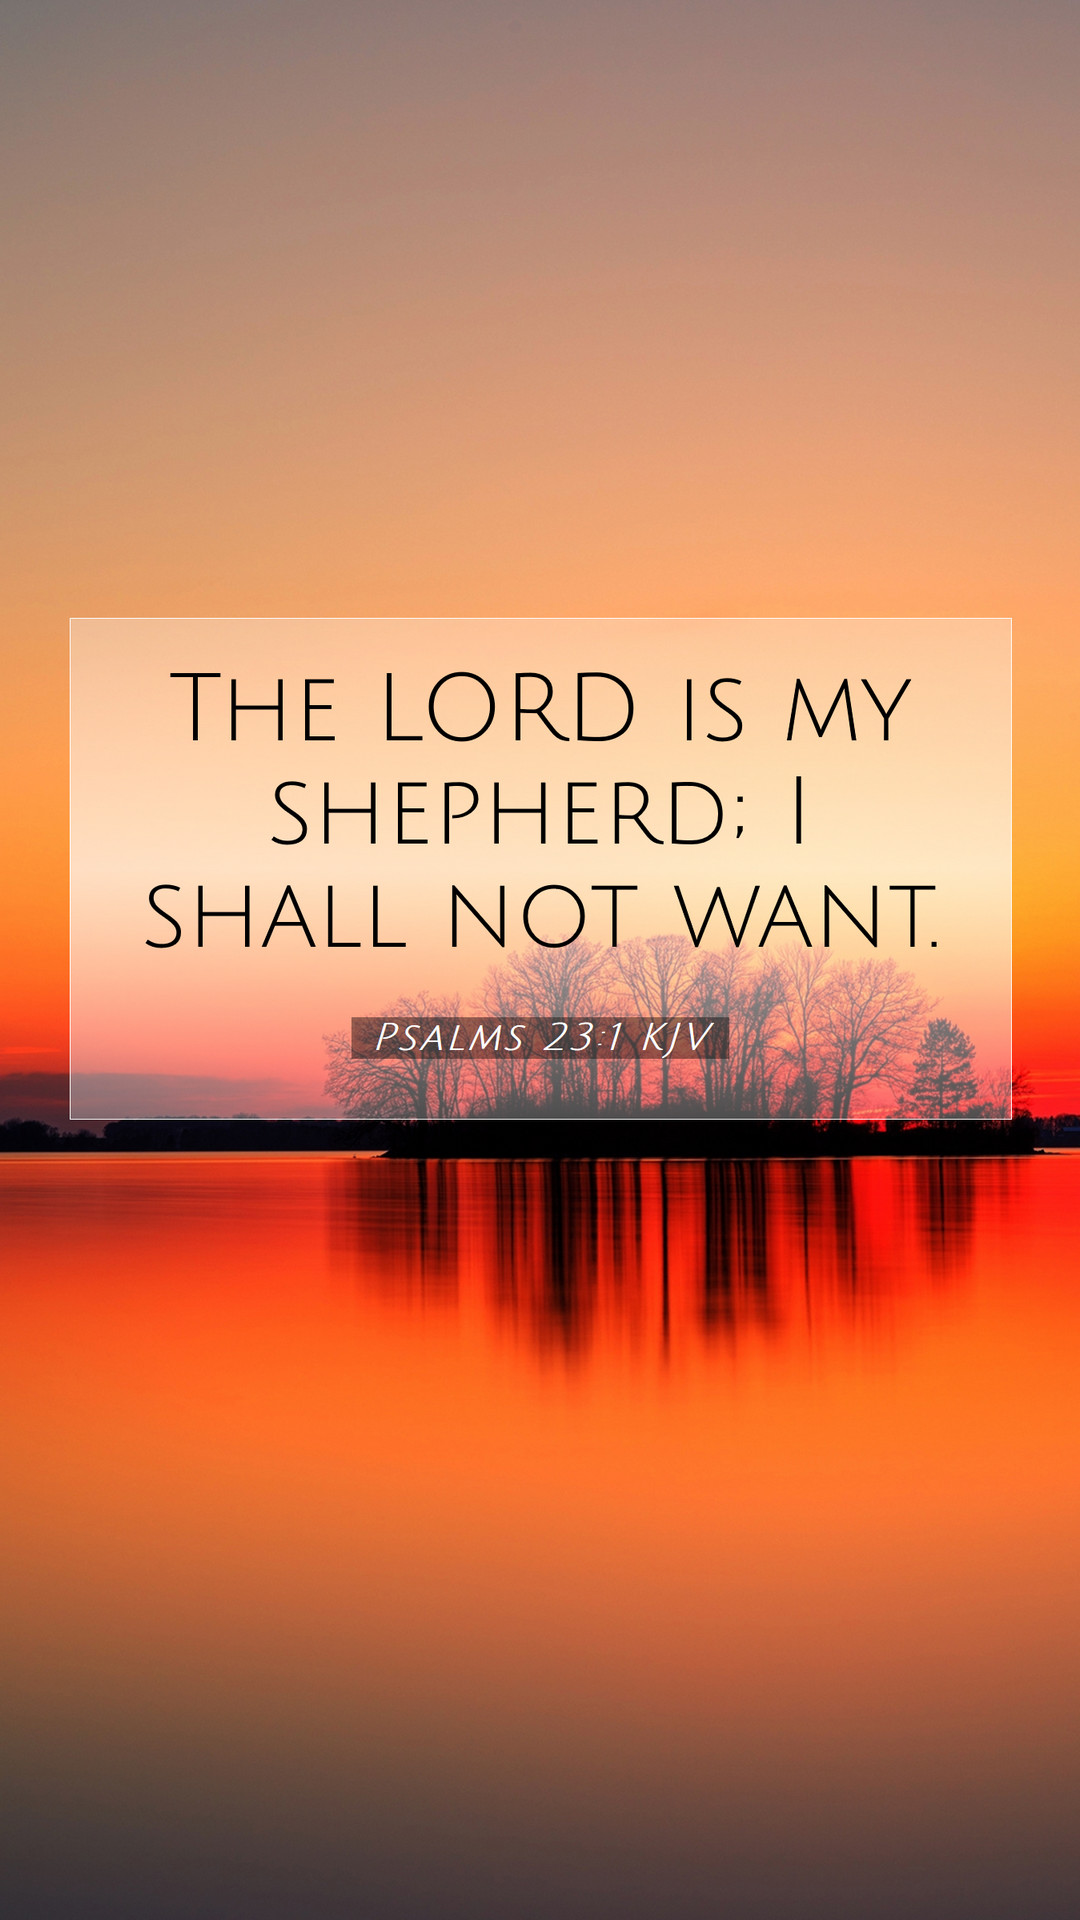 Psalms Kjv Mobile Phone Wallpaper The Lord Is My Shepherd